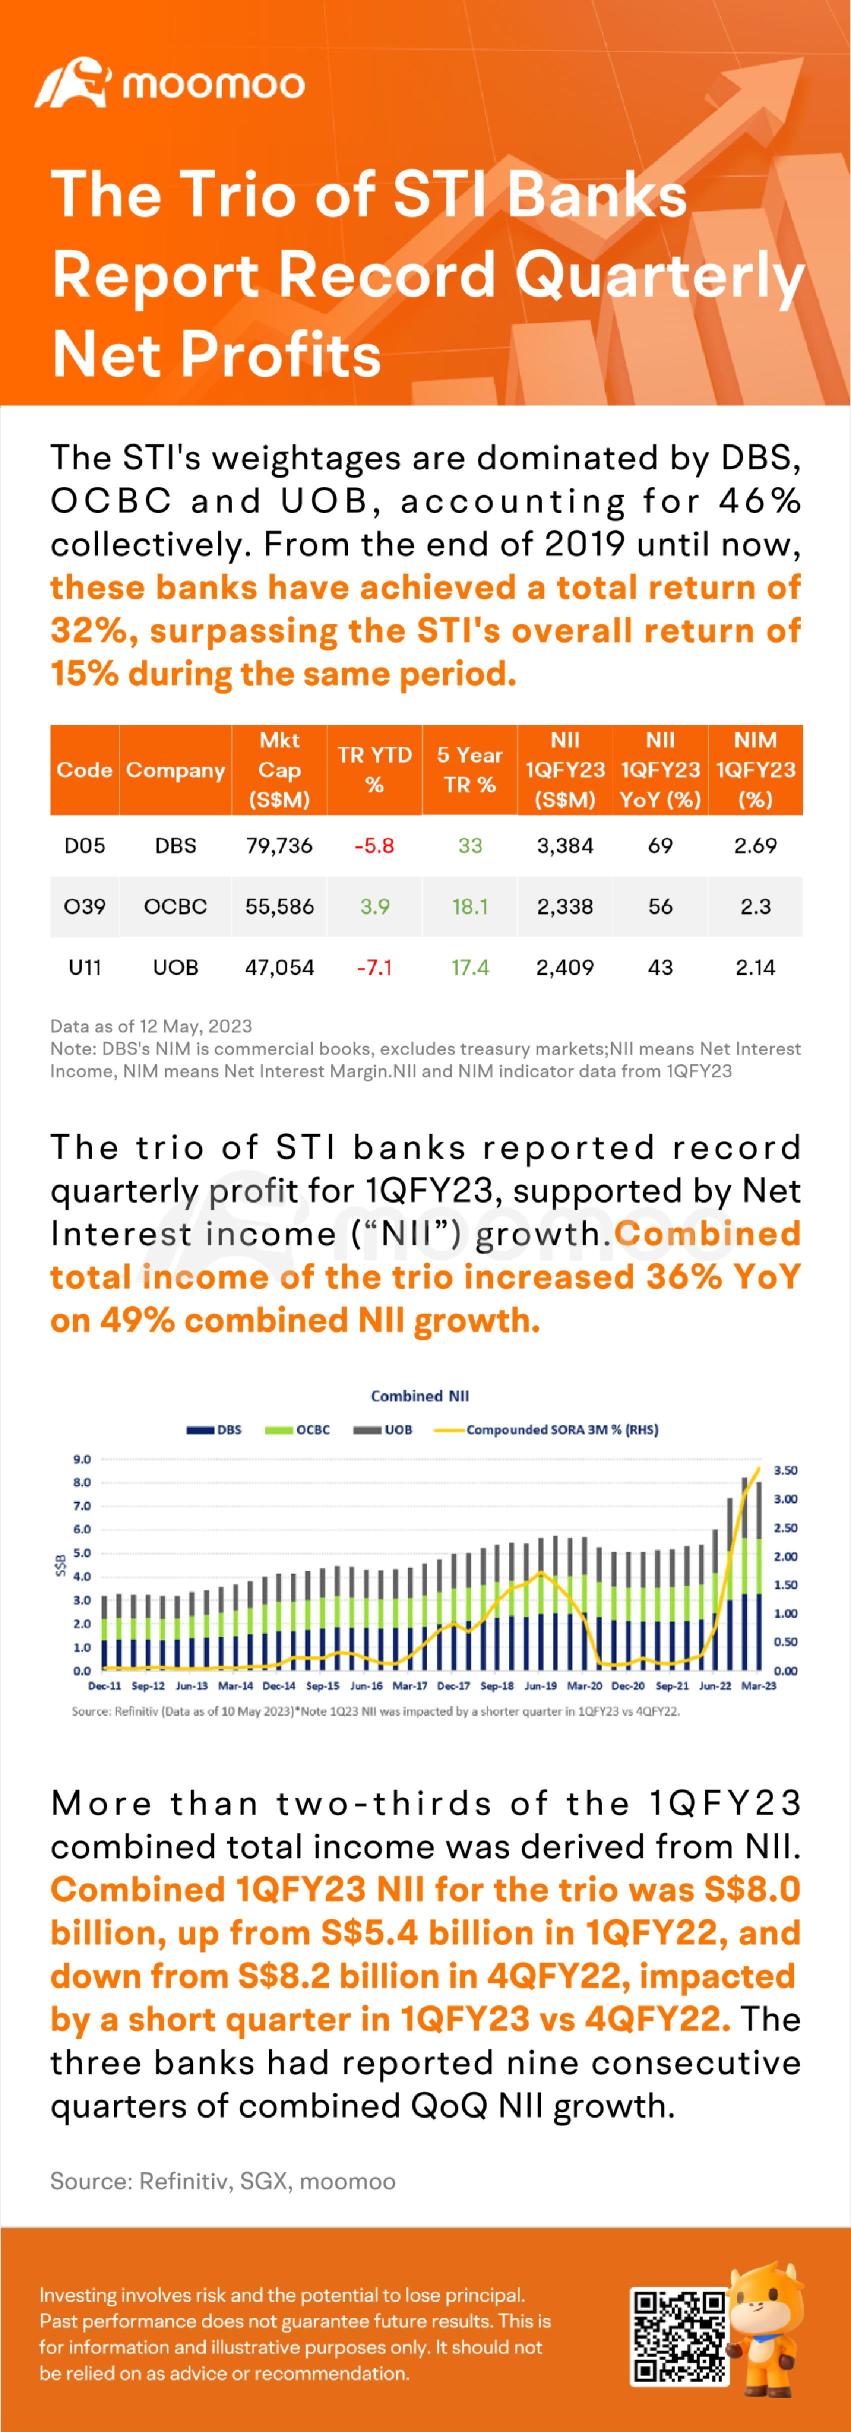 The Trio of STI Banks Report Record Quarterly Net Profits